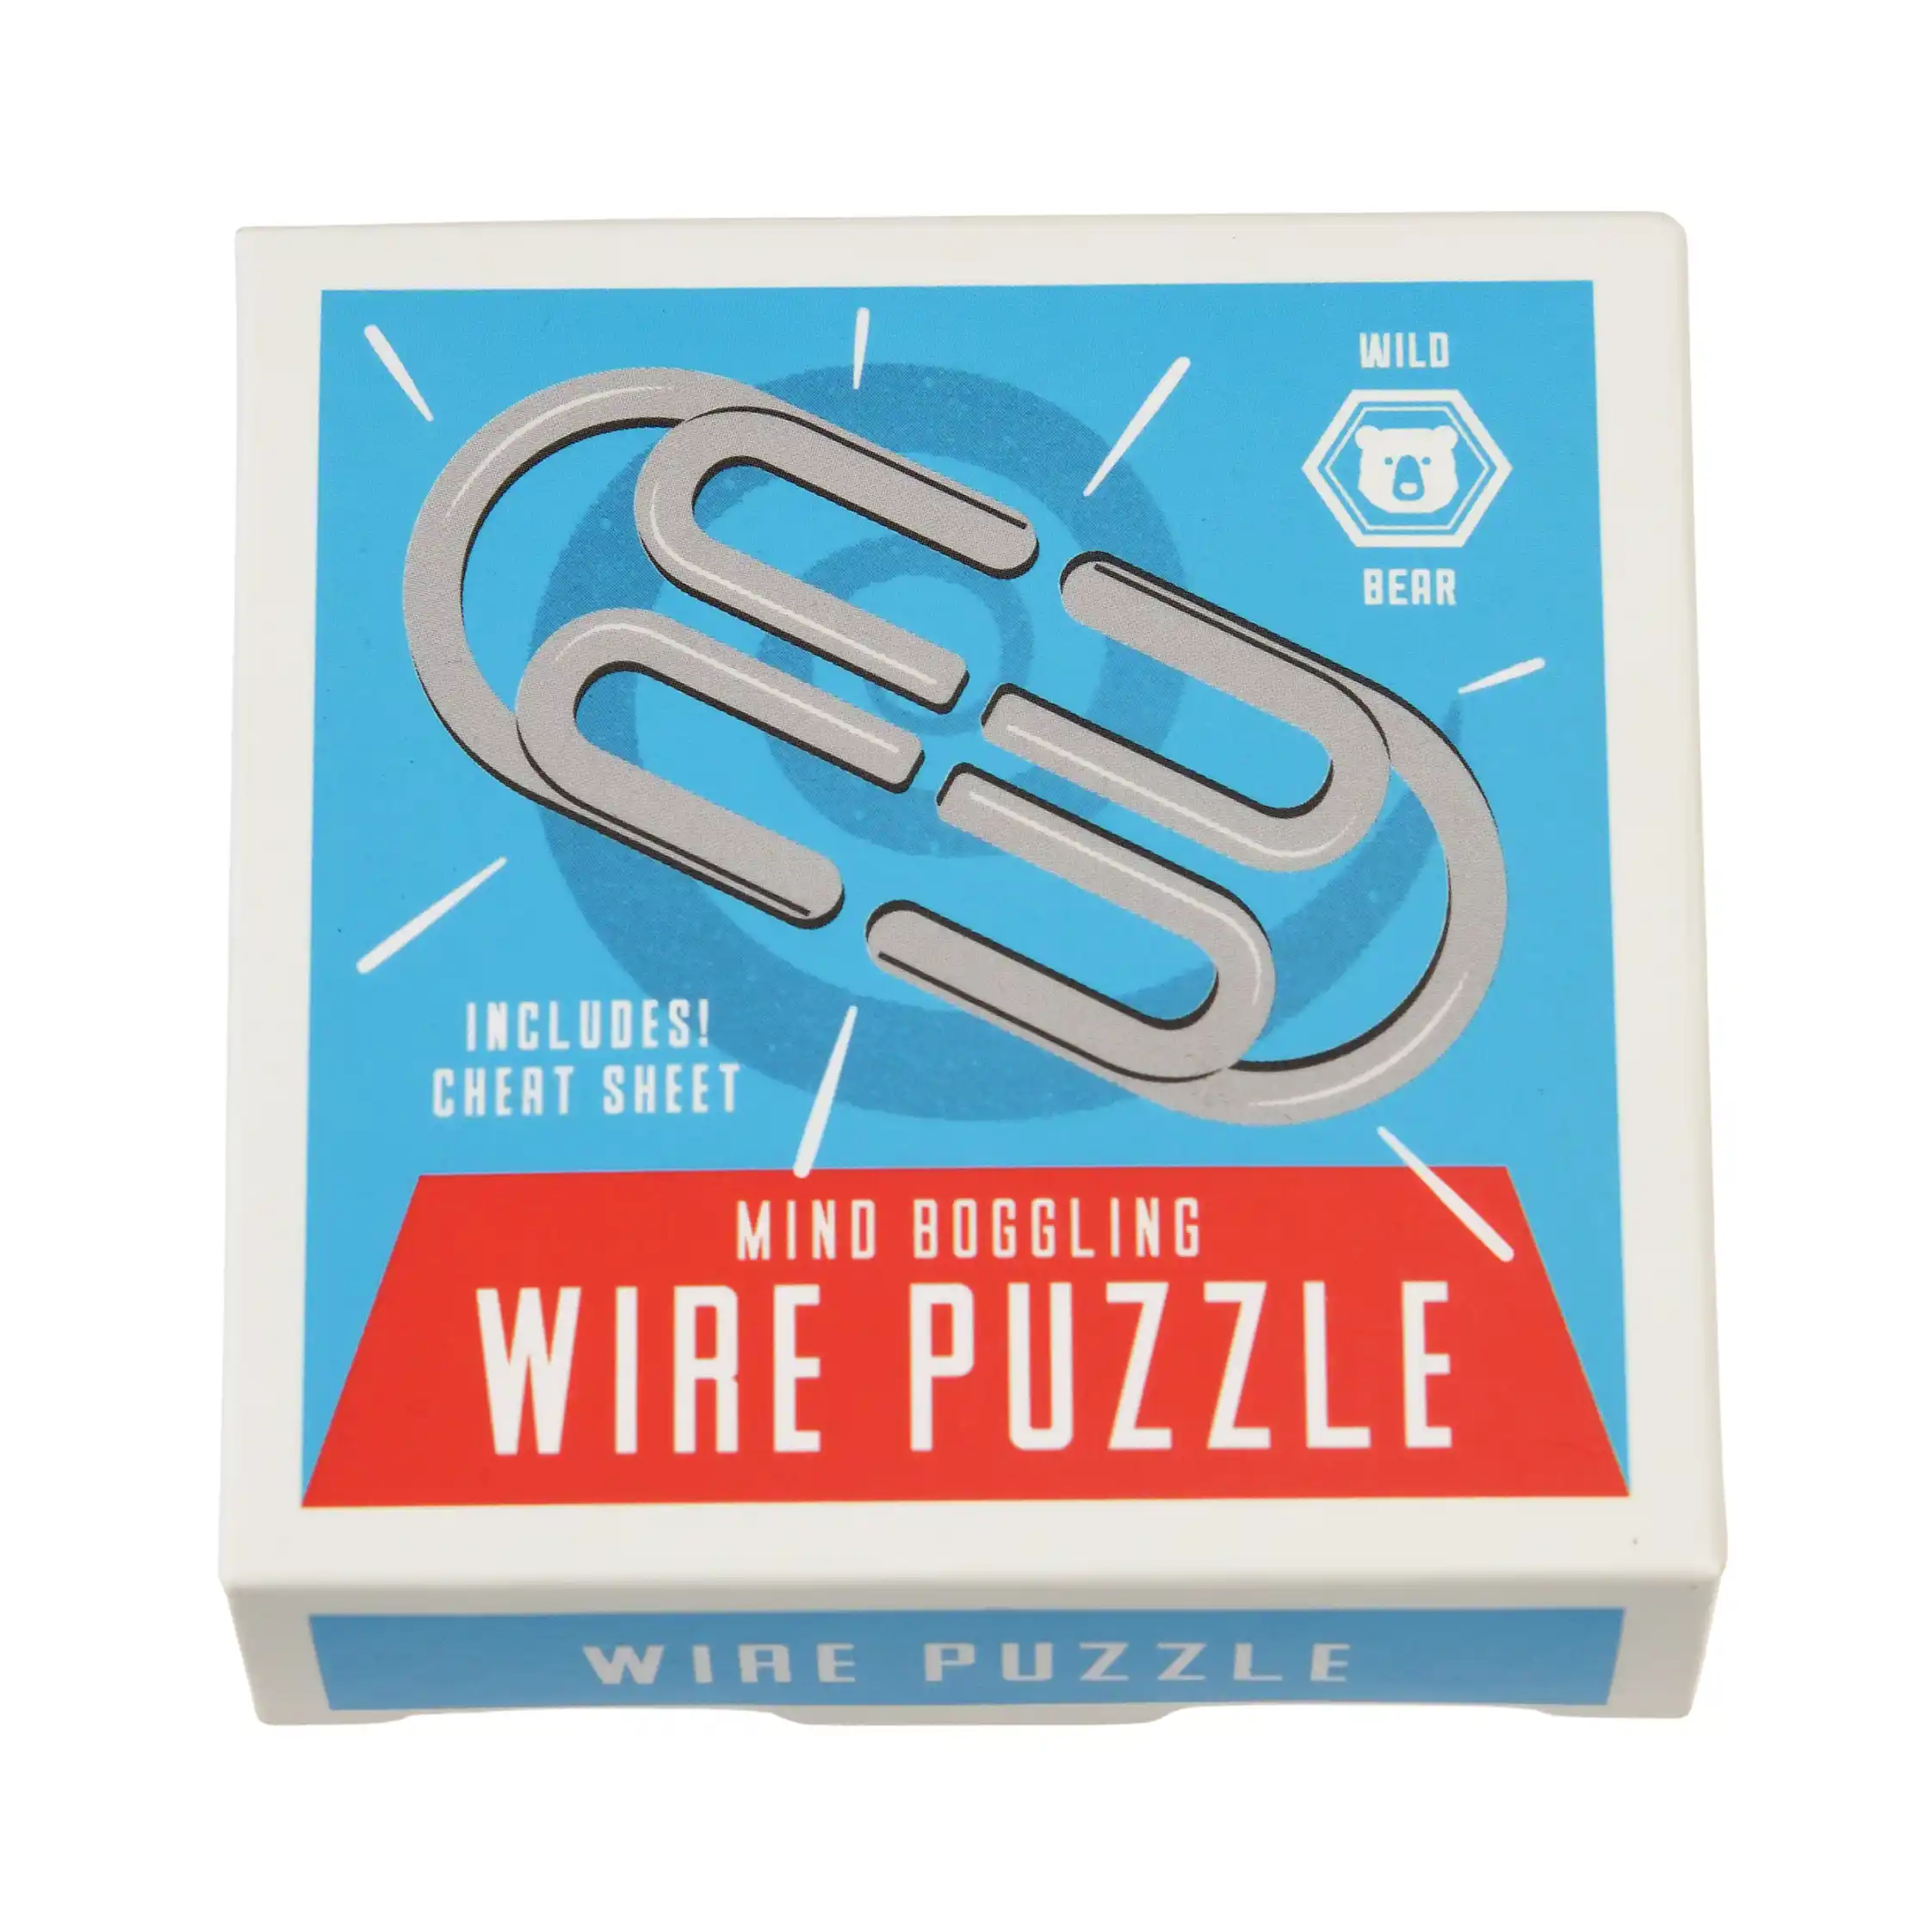 wire puzzle - wild bear